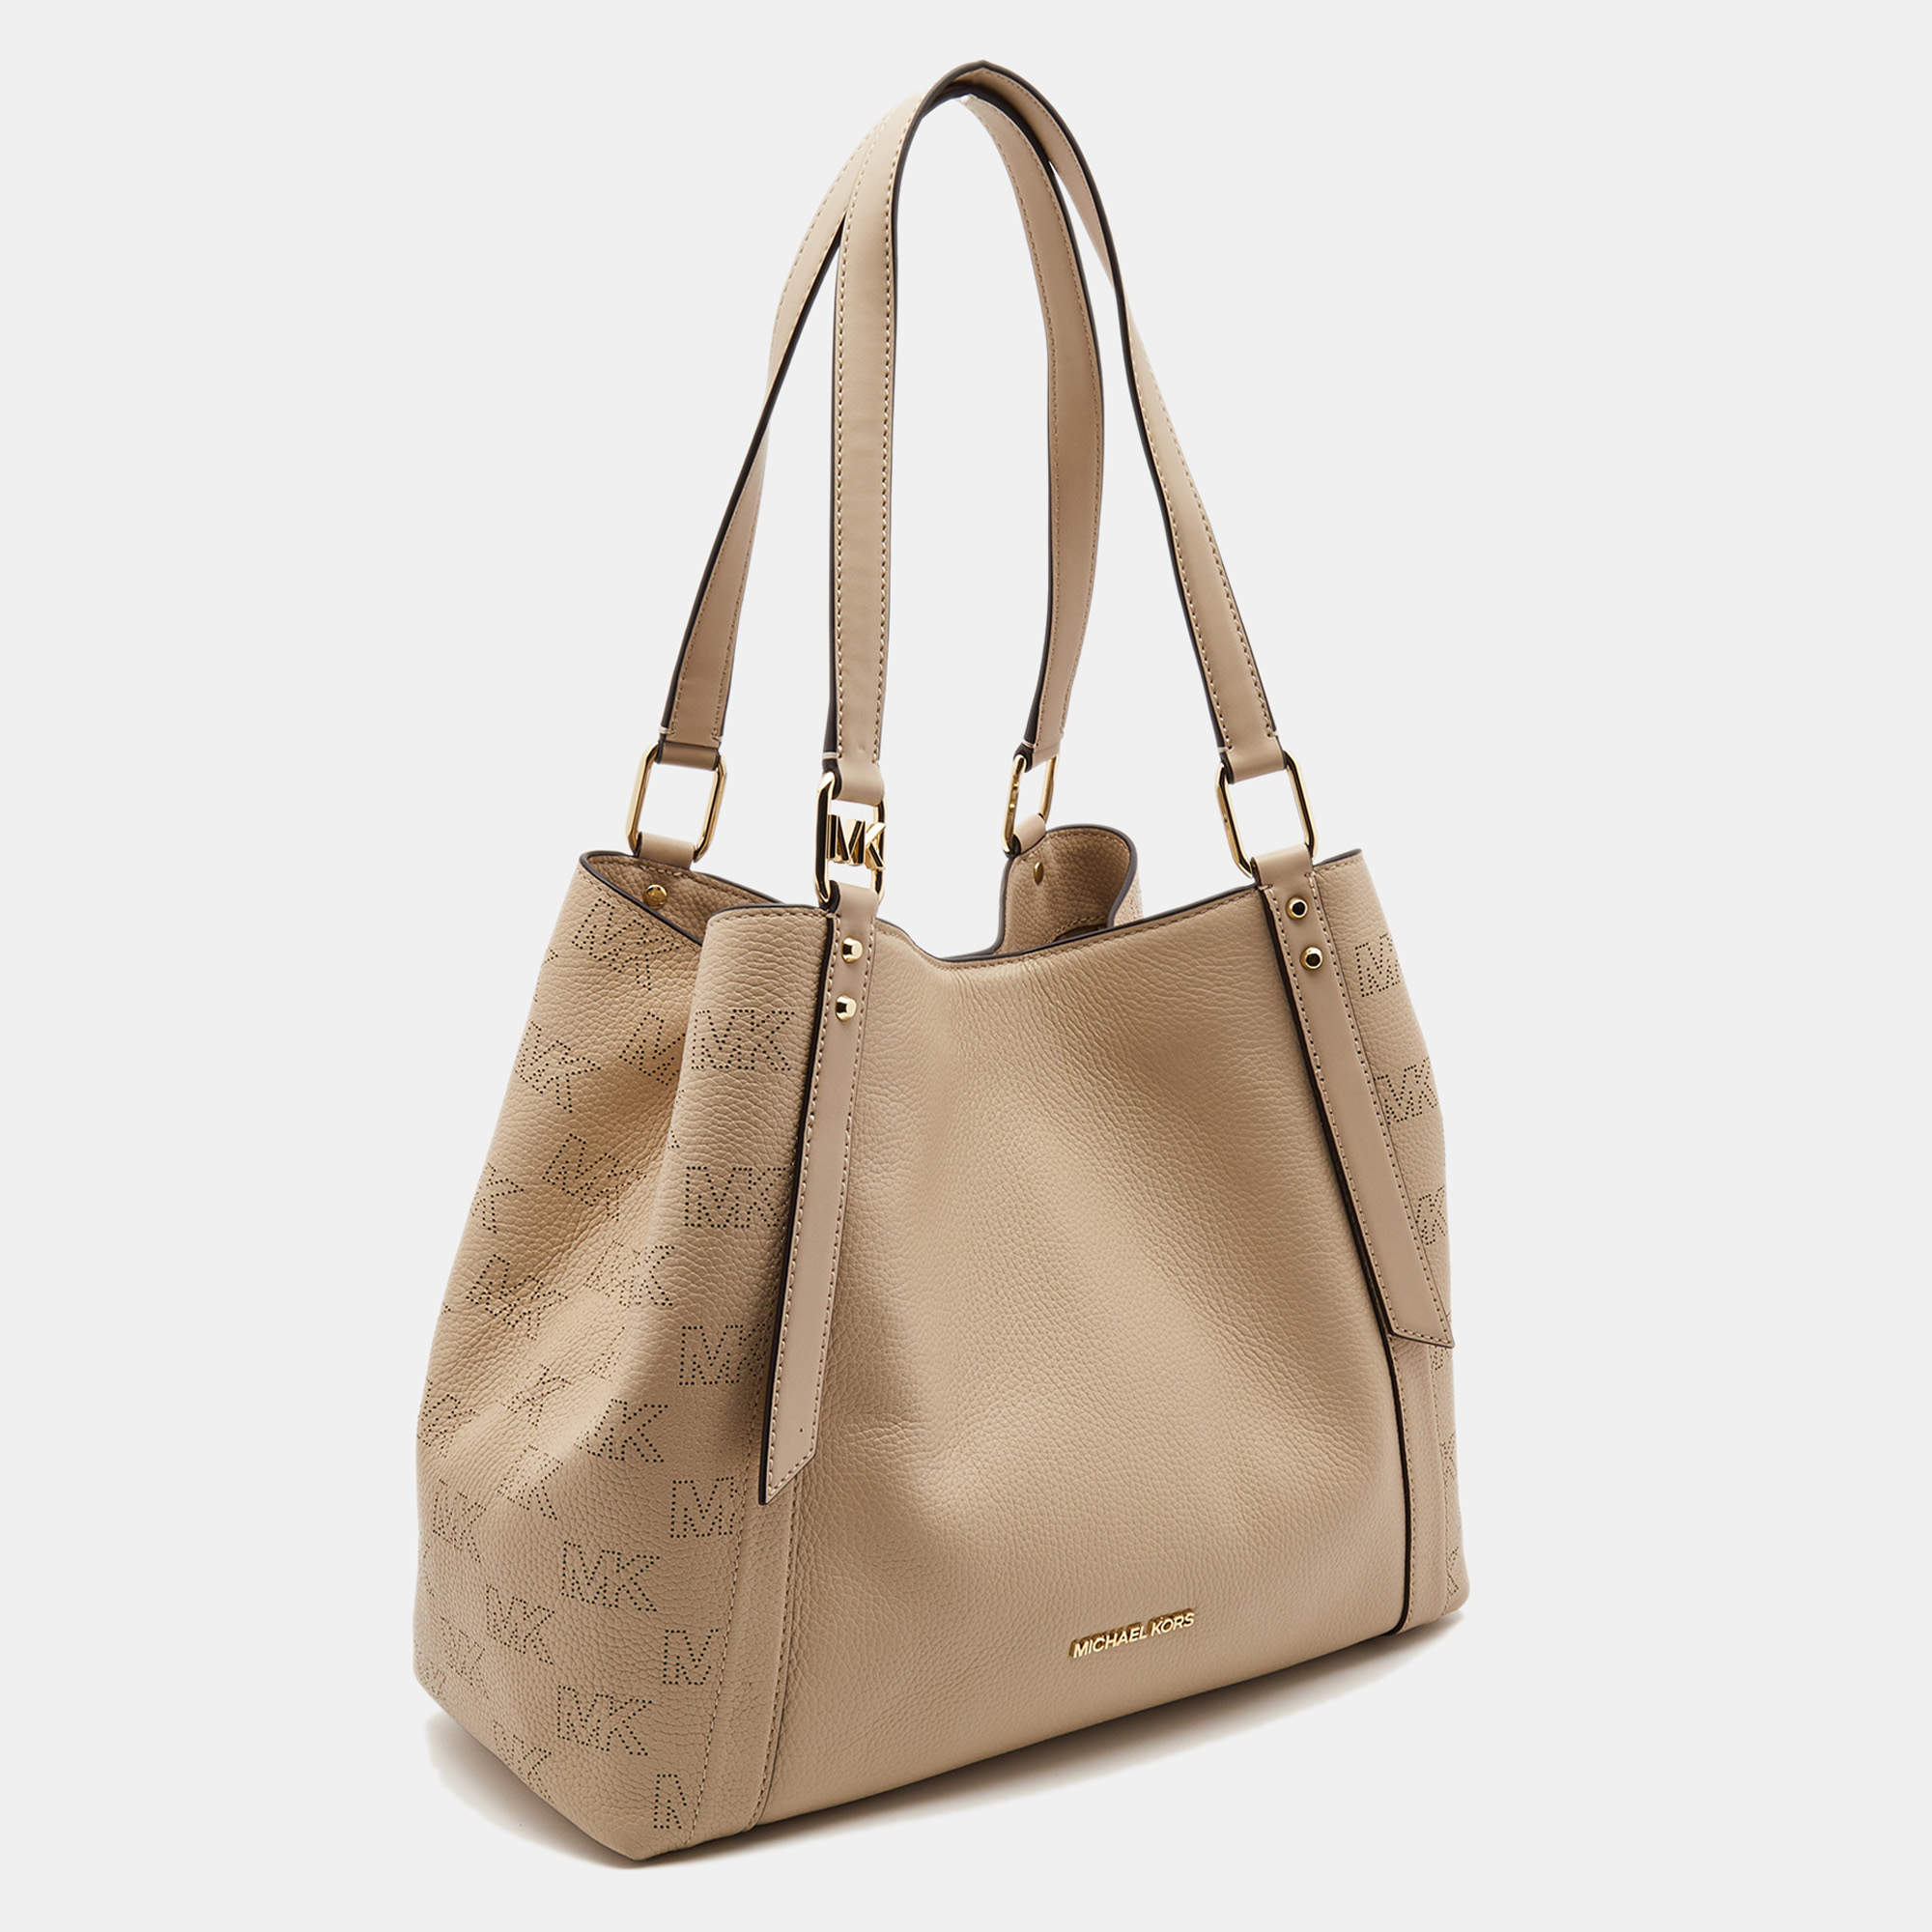 Mk Tote Bag Lady Handbag Fashion Shoulder Bag Ladies Bag - China